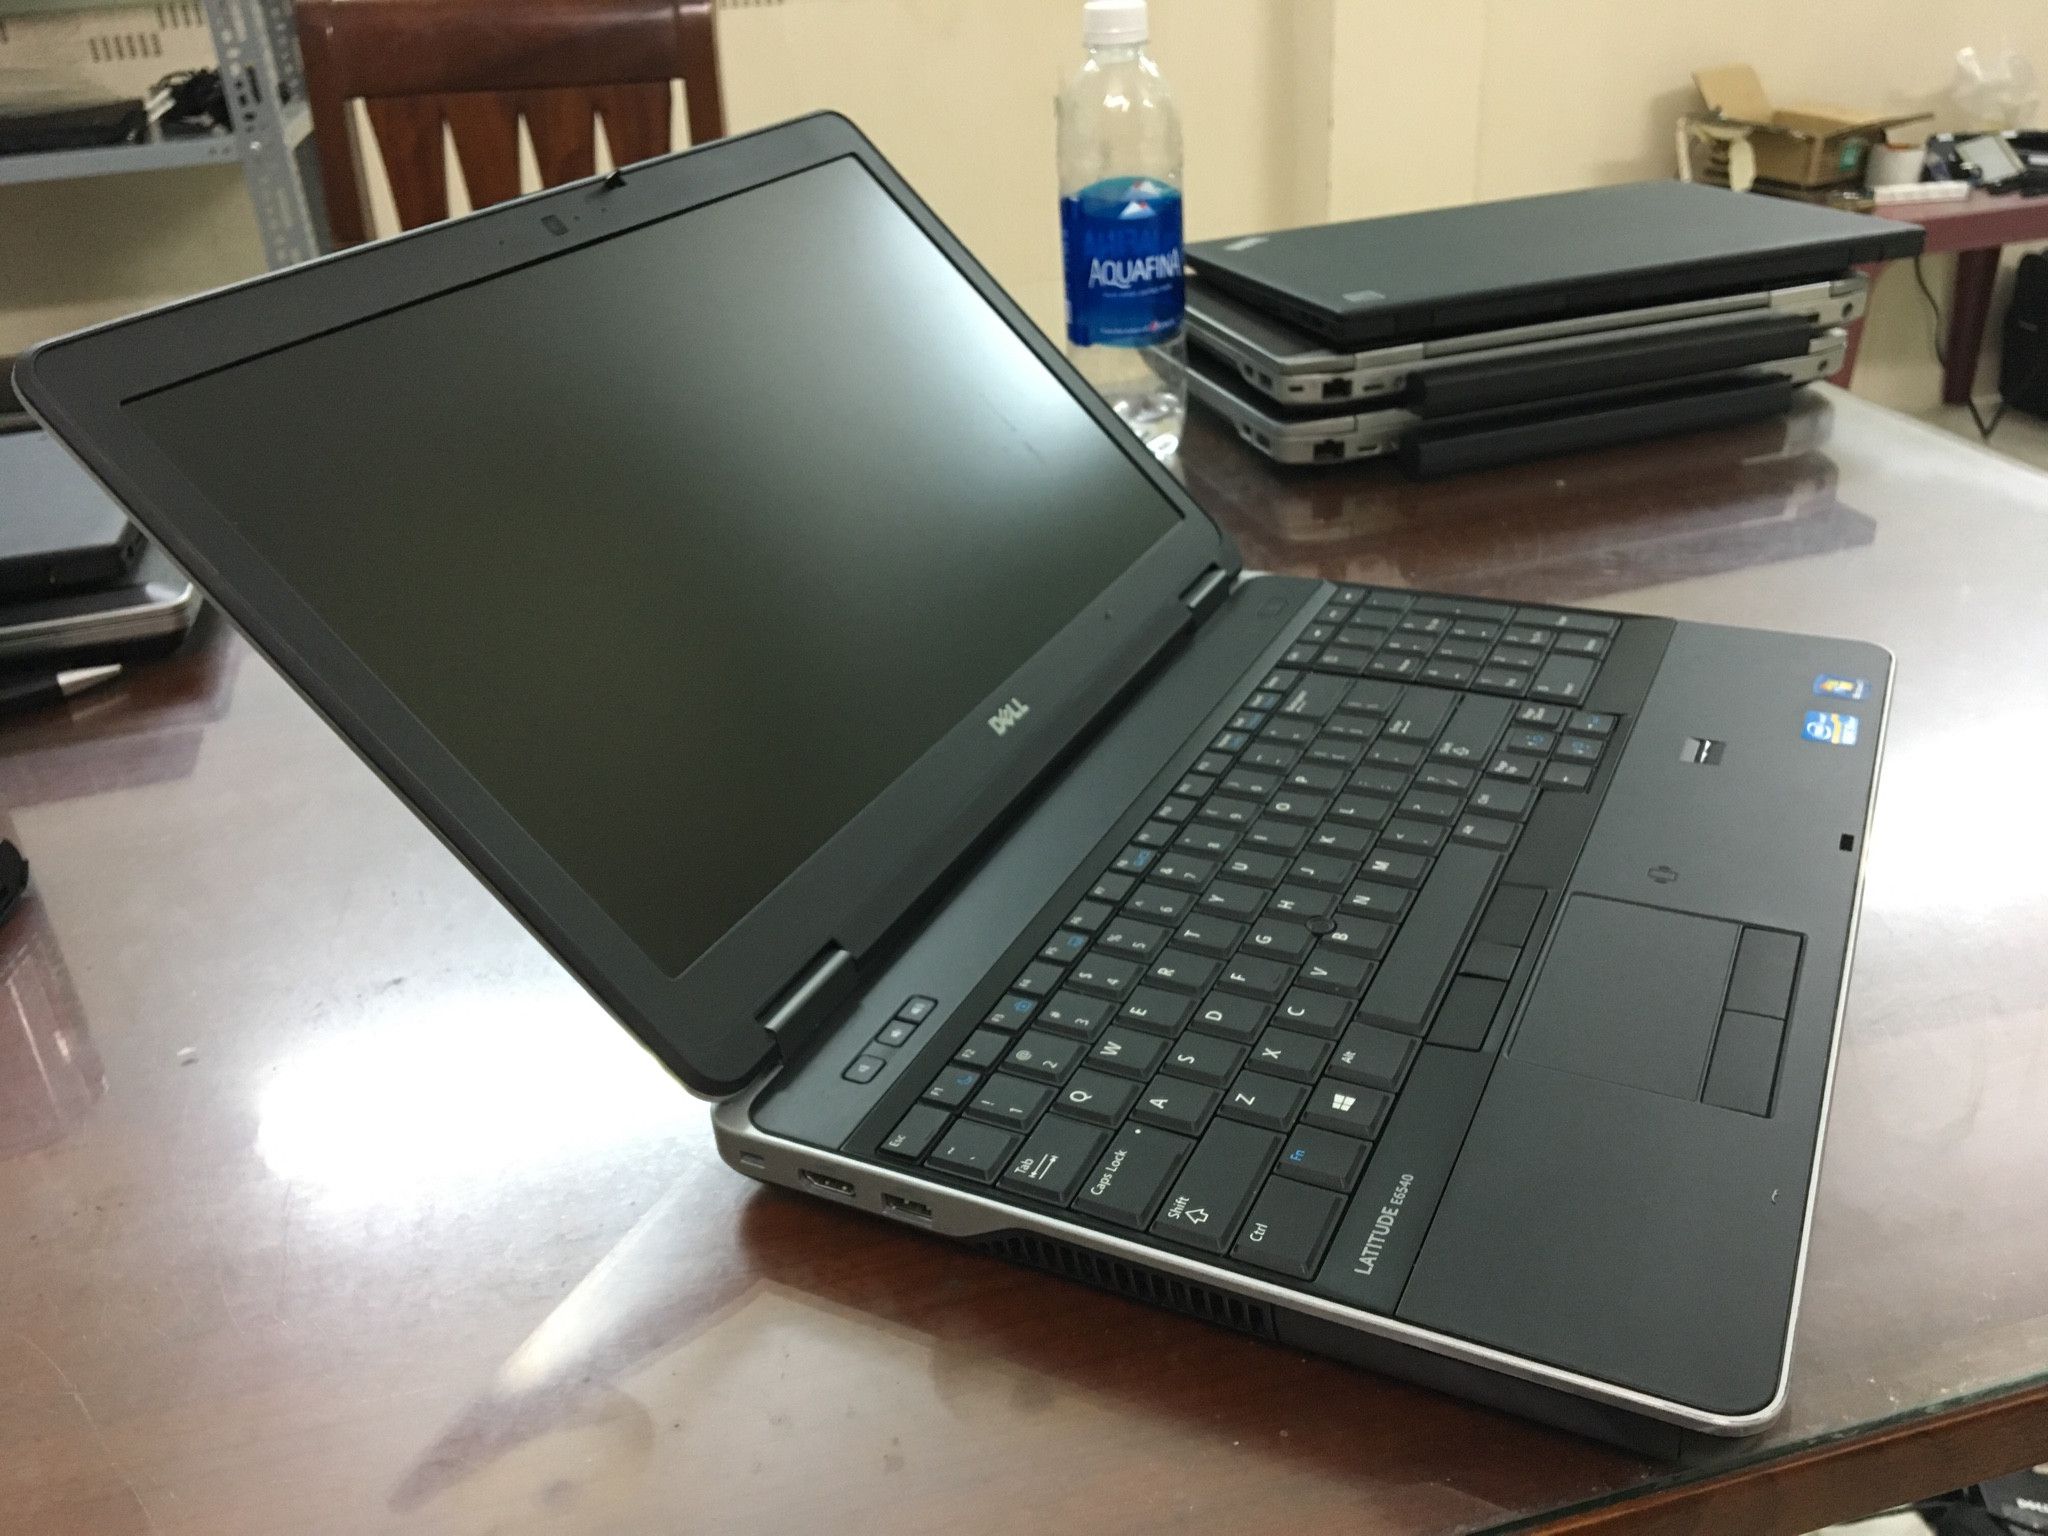 Laptop Dell latitude E6540, i7 4800mq, 8gb, 500gb, card rời 2gb, 15.6 inch fullhd